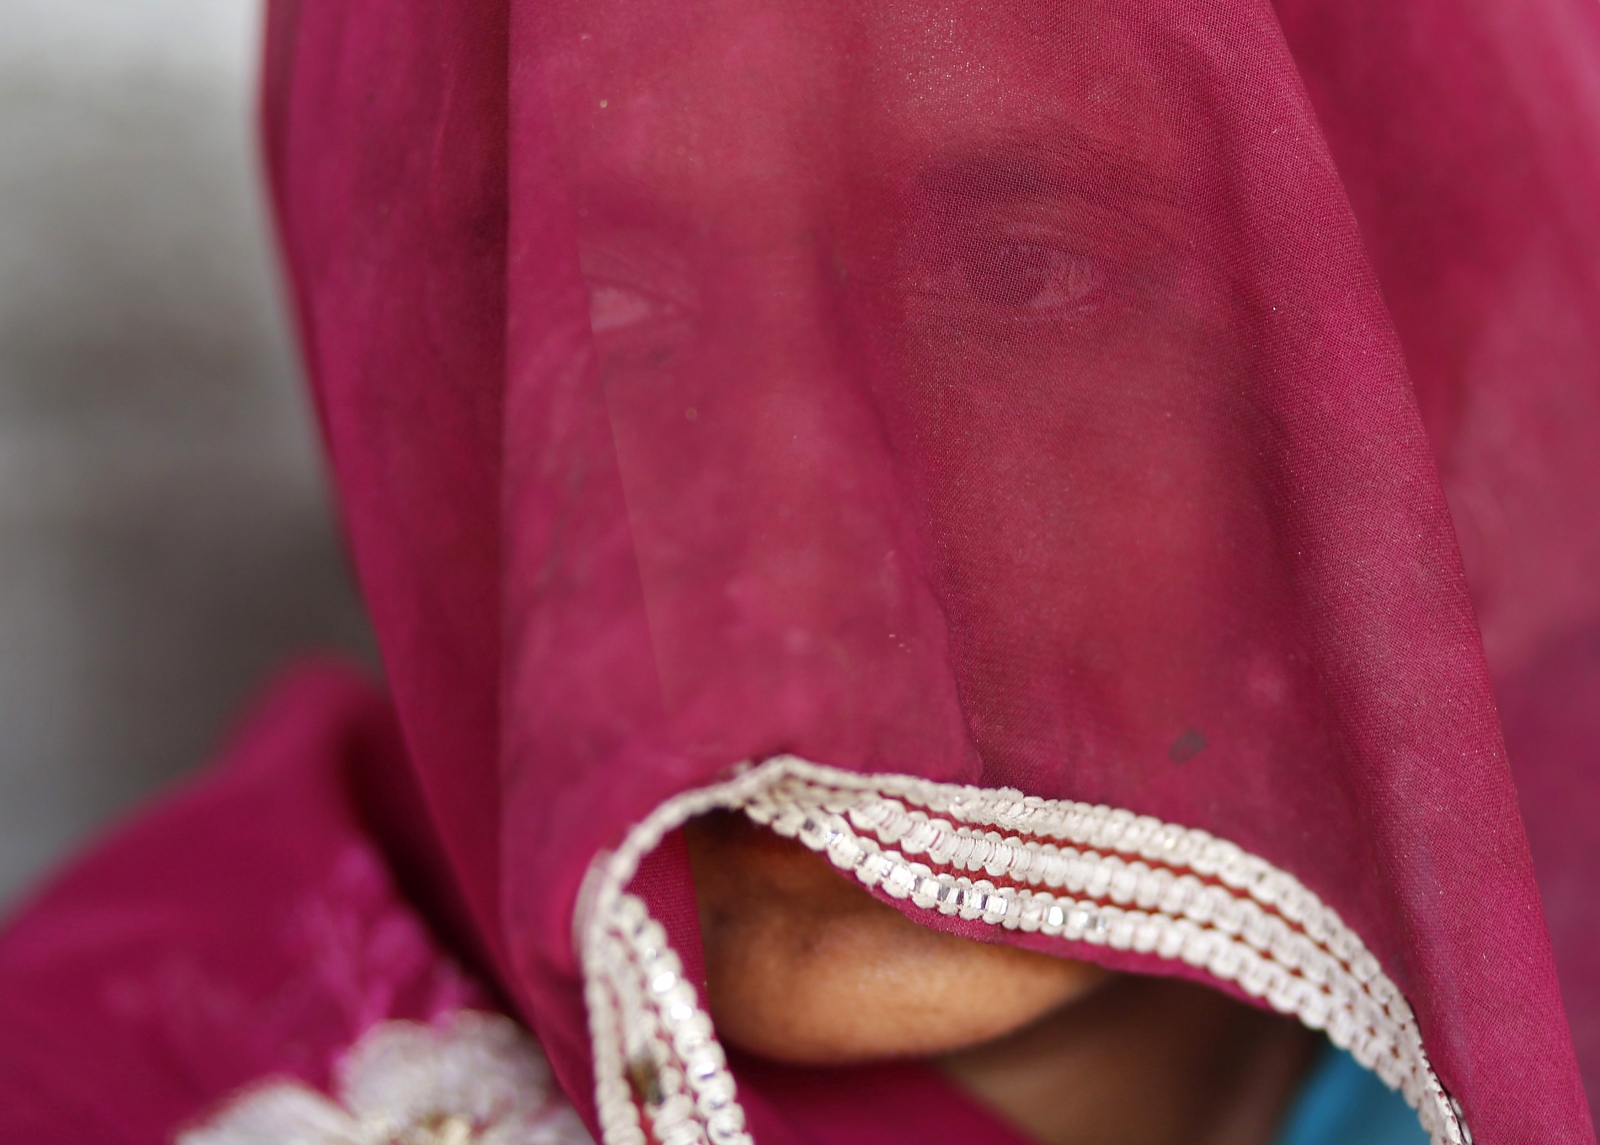 Uttar Pradesh murder victim mother